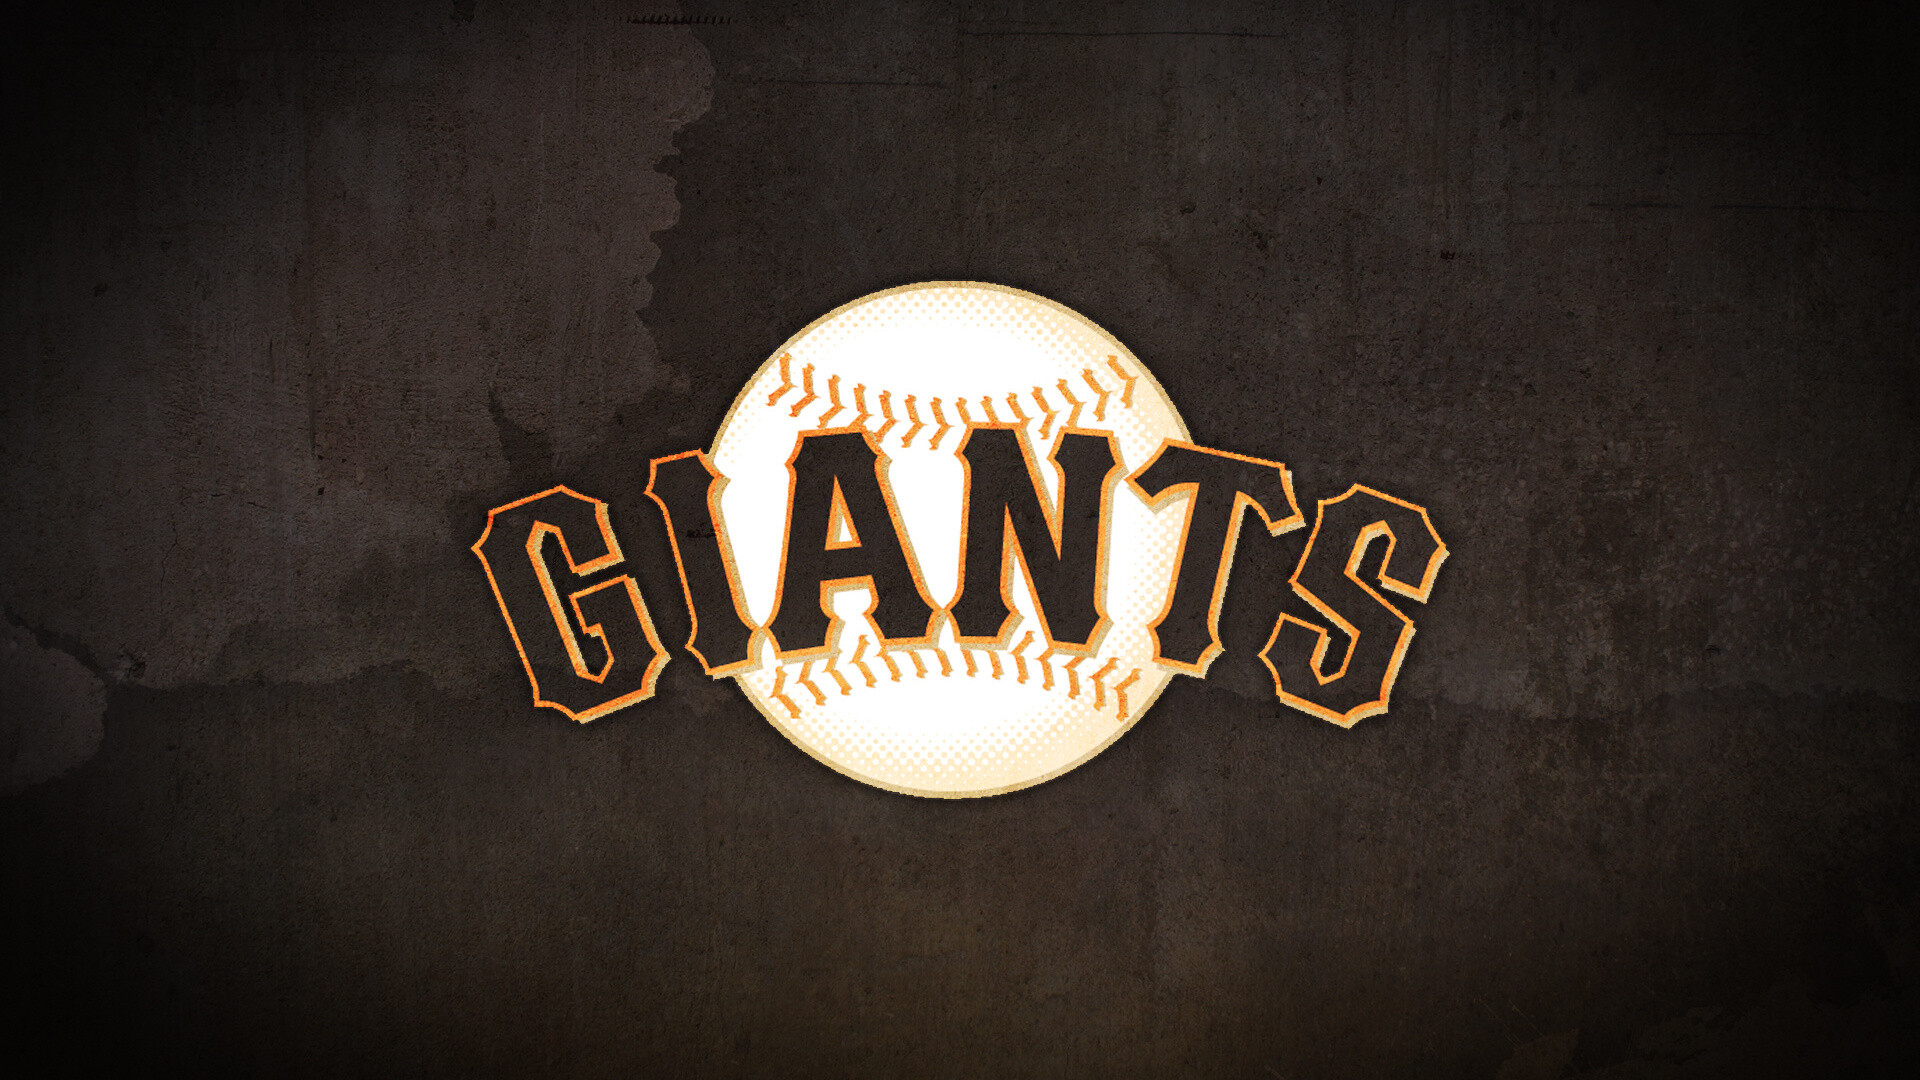 San Francisco Giants: Five-time World Series championships winners, The Baseball Hall of Fame members. 1920x1080 Full HD Wallpaper.